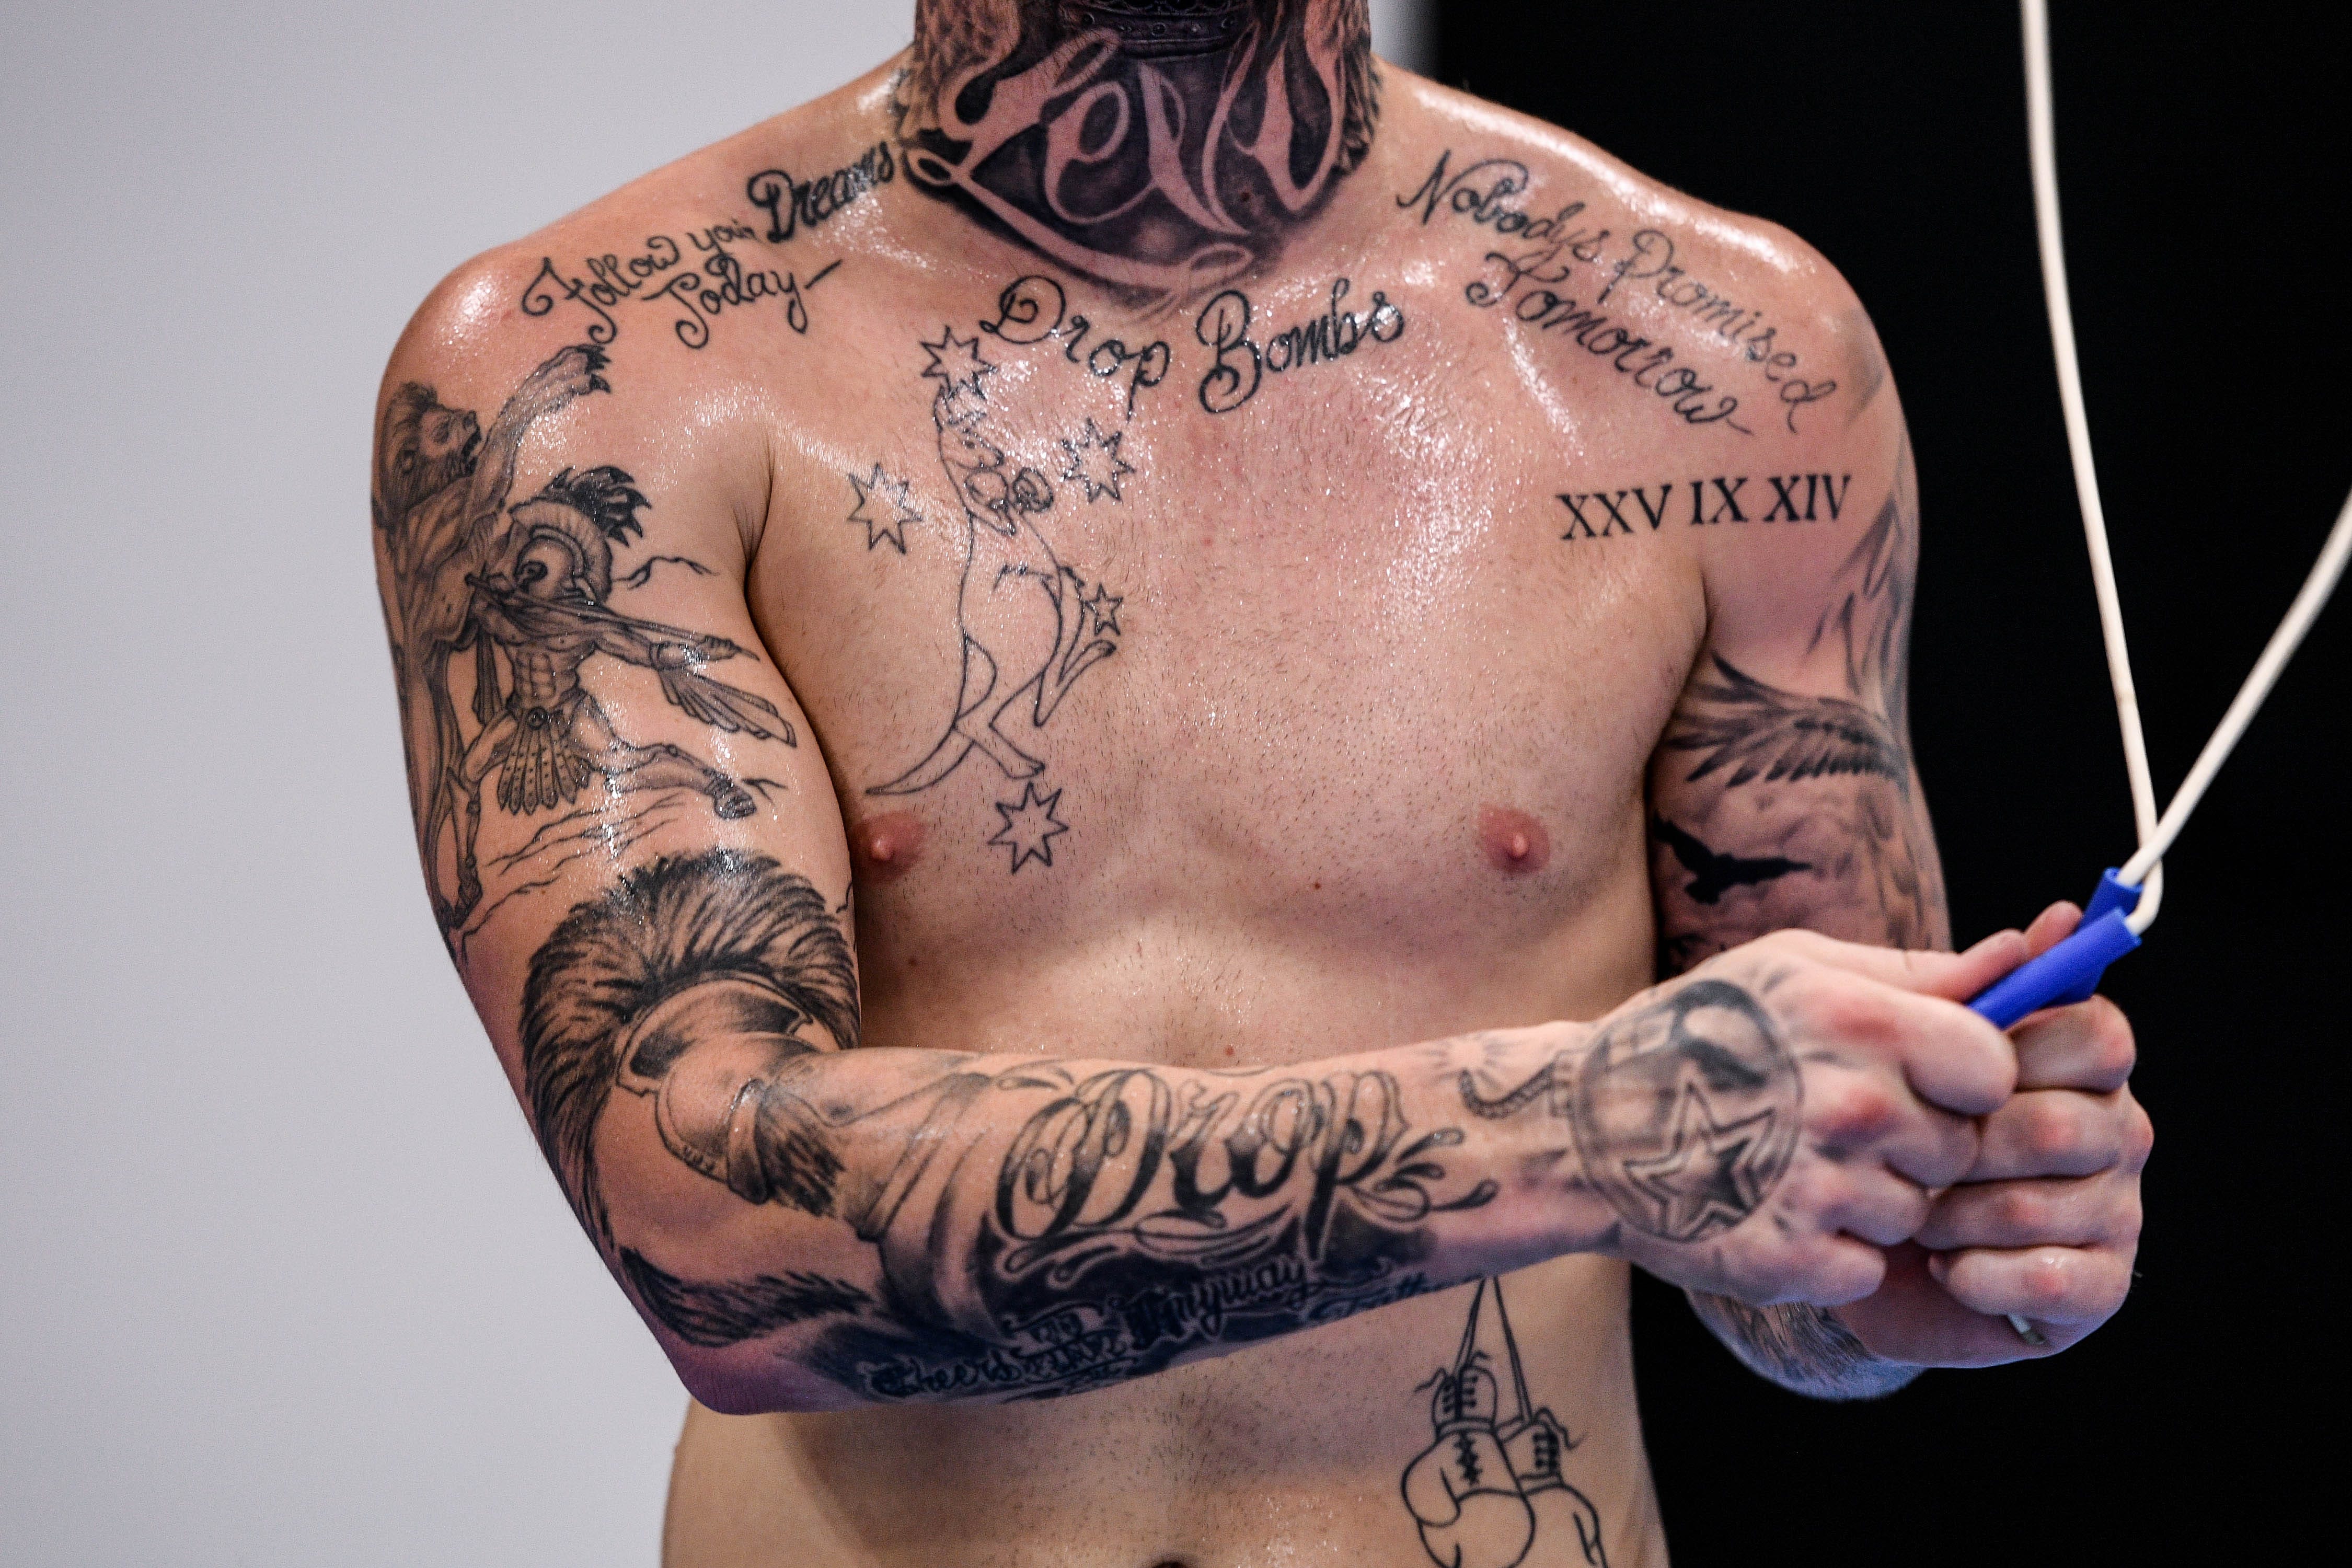 Jackson Deans Tattoo Inspired By Daniel DayLewis Character  Effingham  Radio